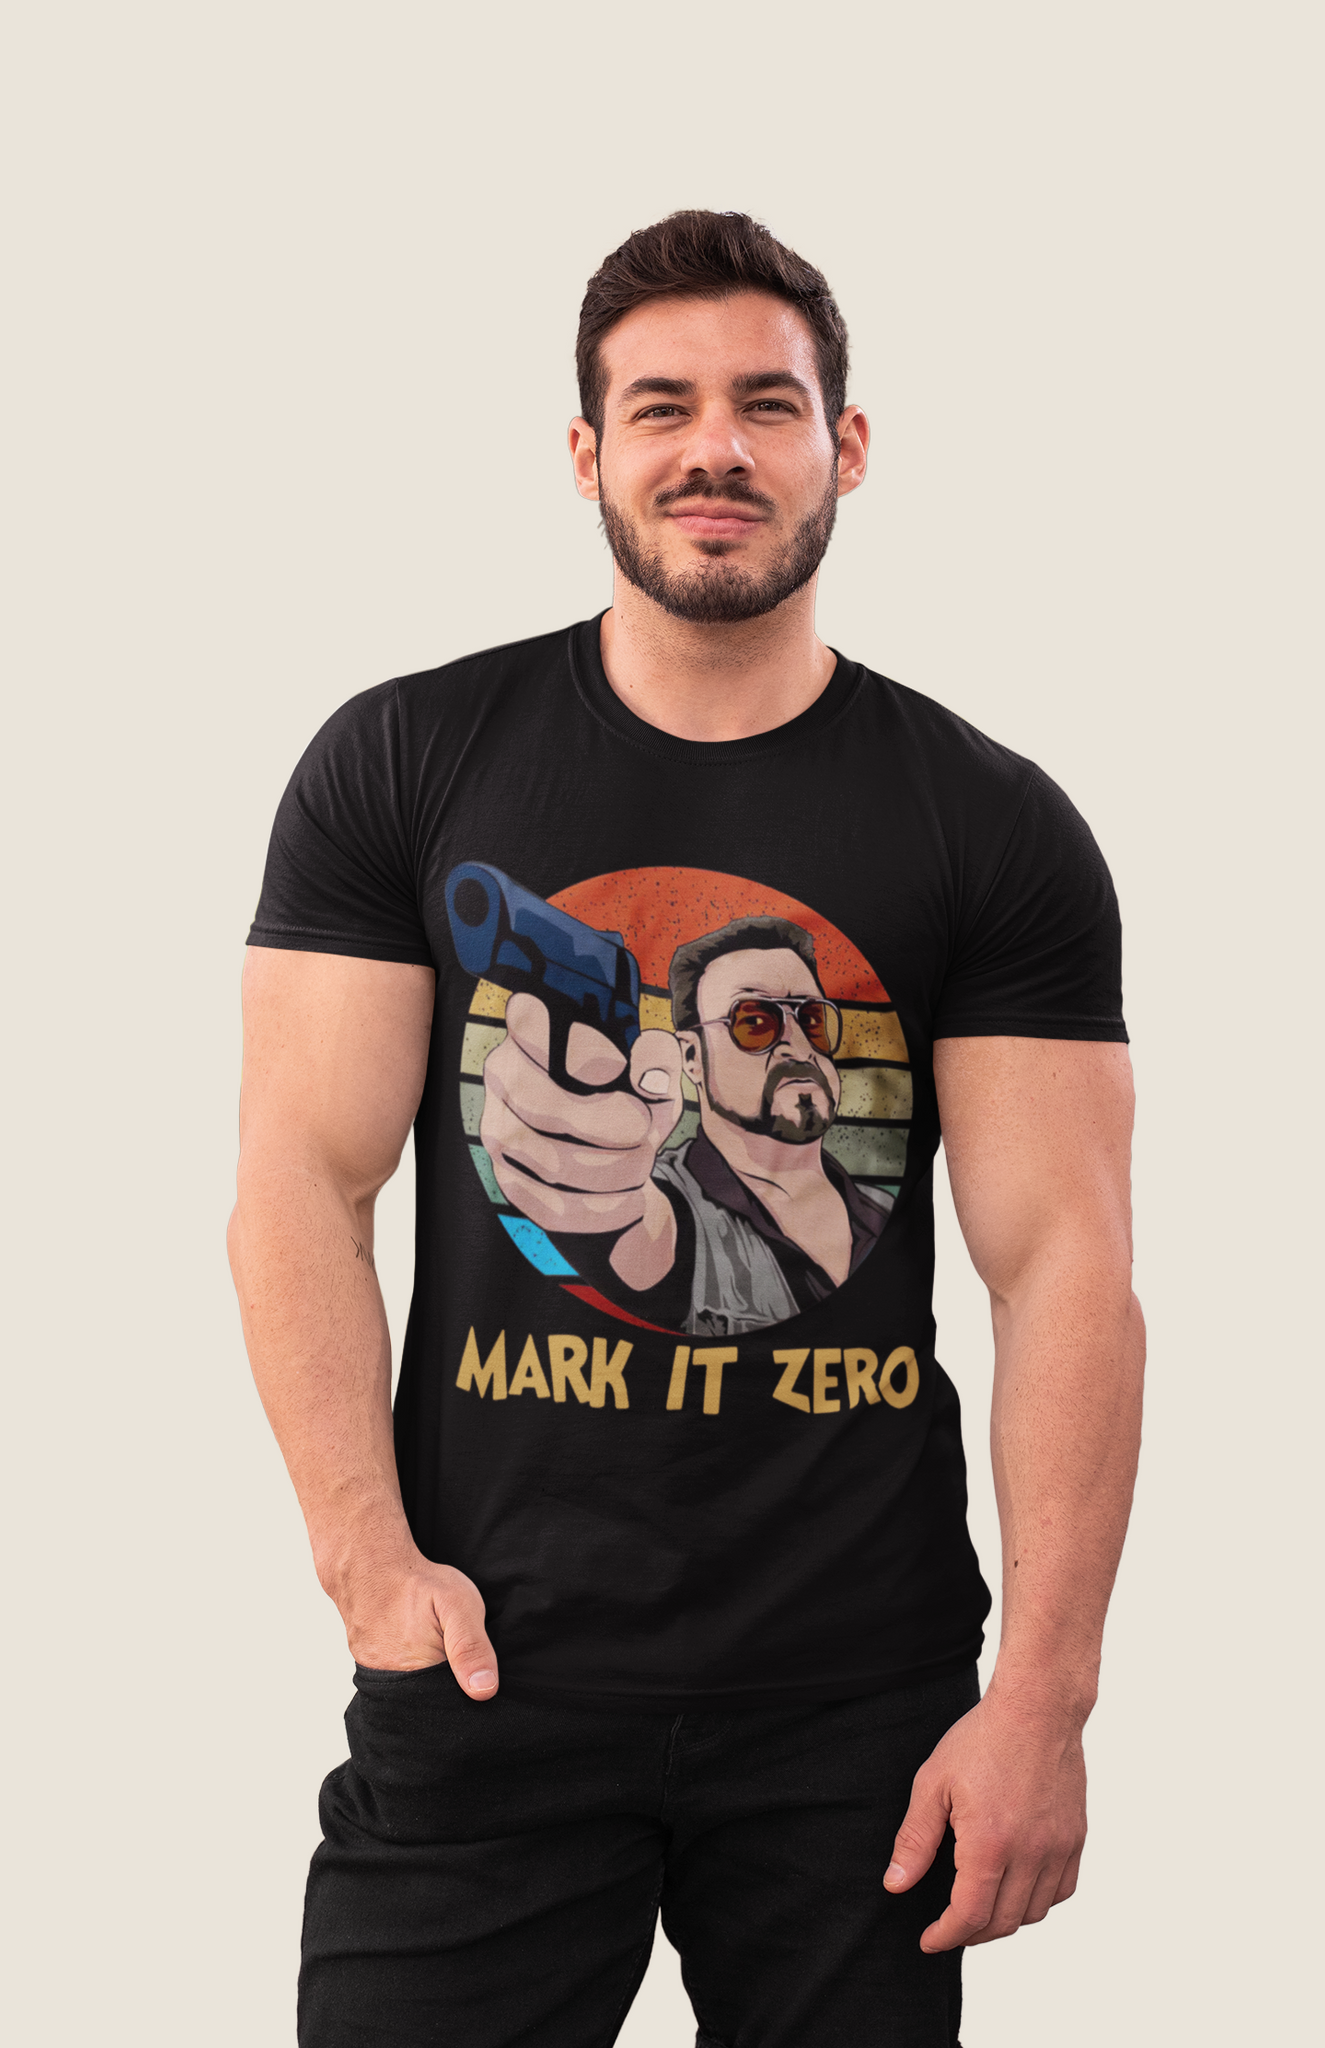 The Big Lebowski T Shirt, Walter Sobchak T Shirt, Mark It Zero Vintage Pointing A Gun Tshirt